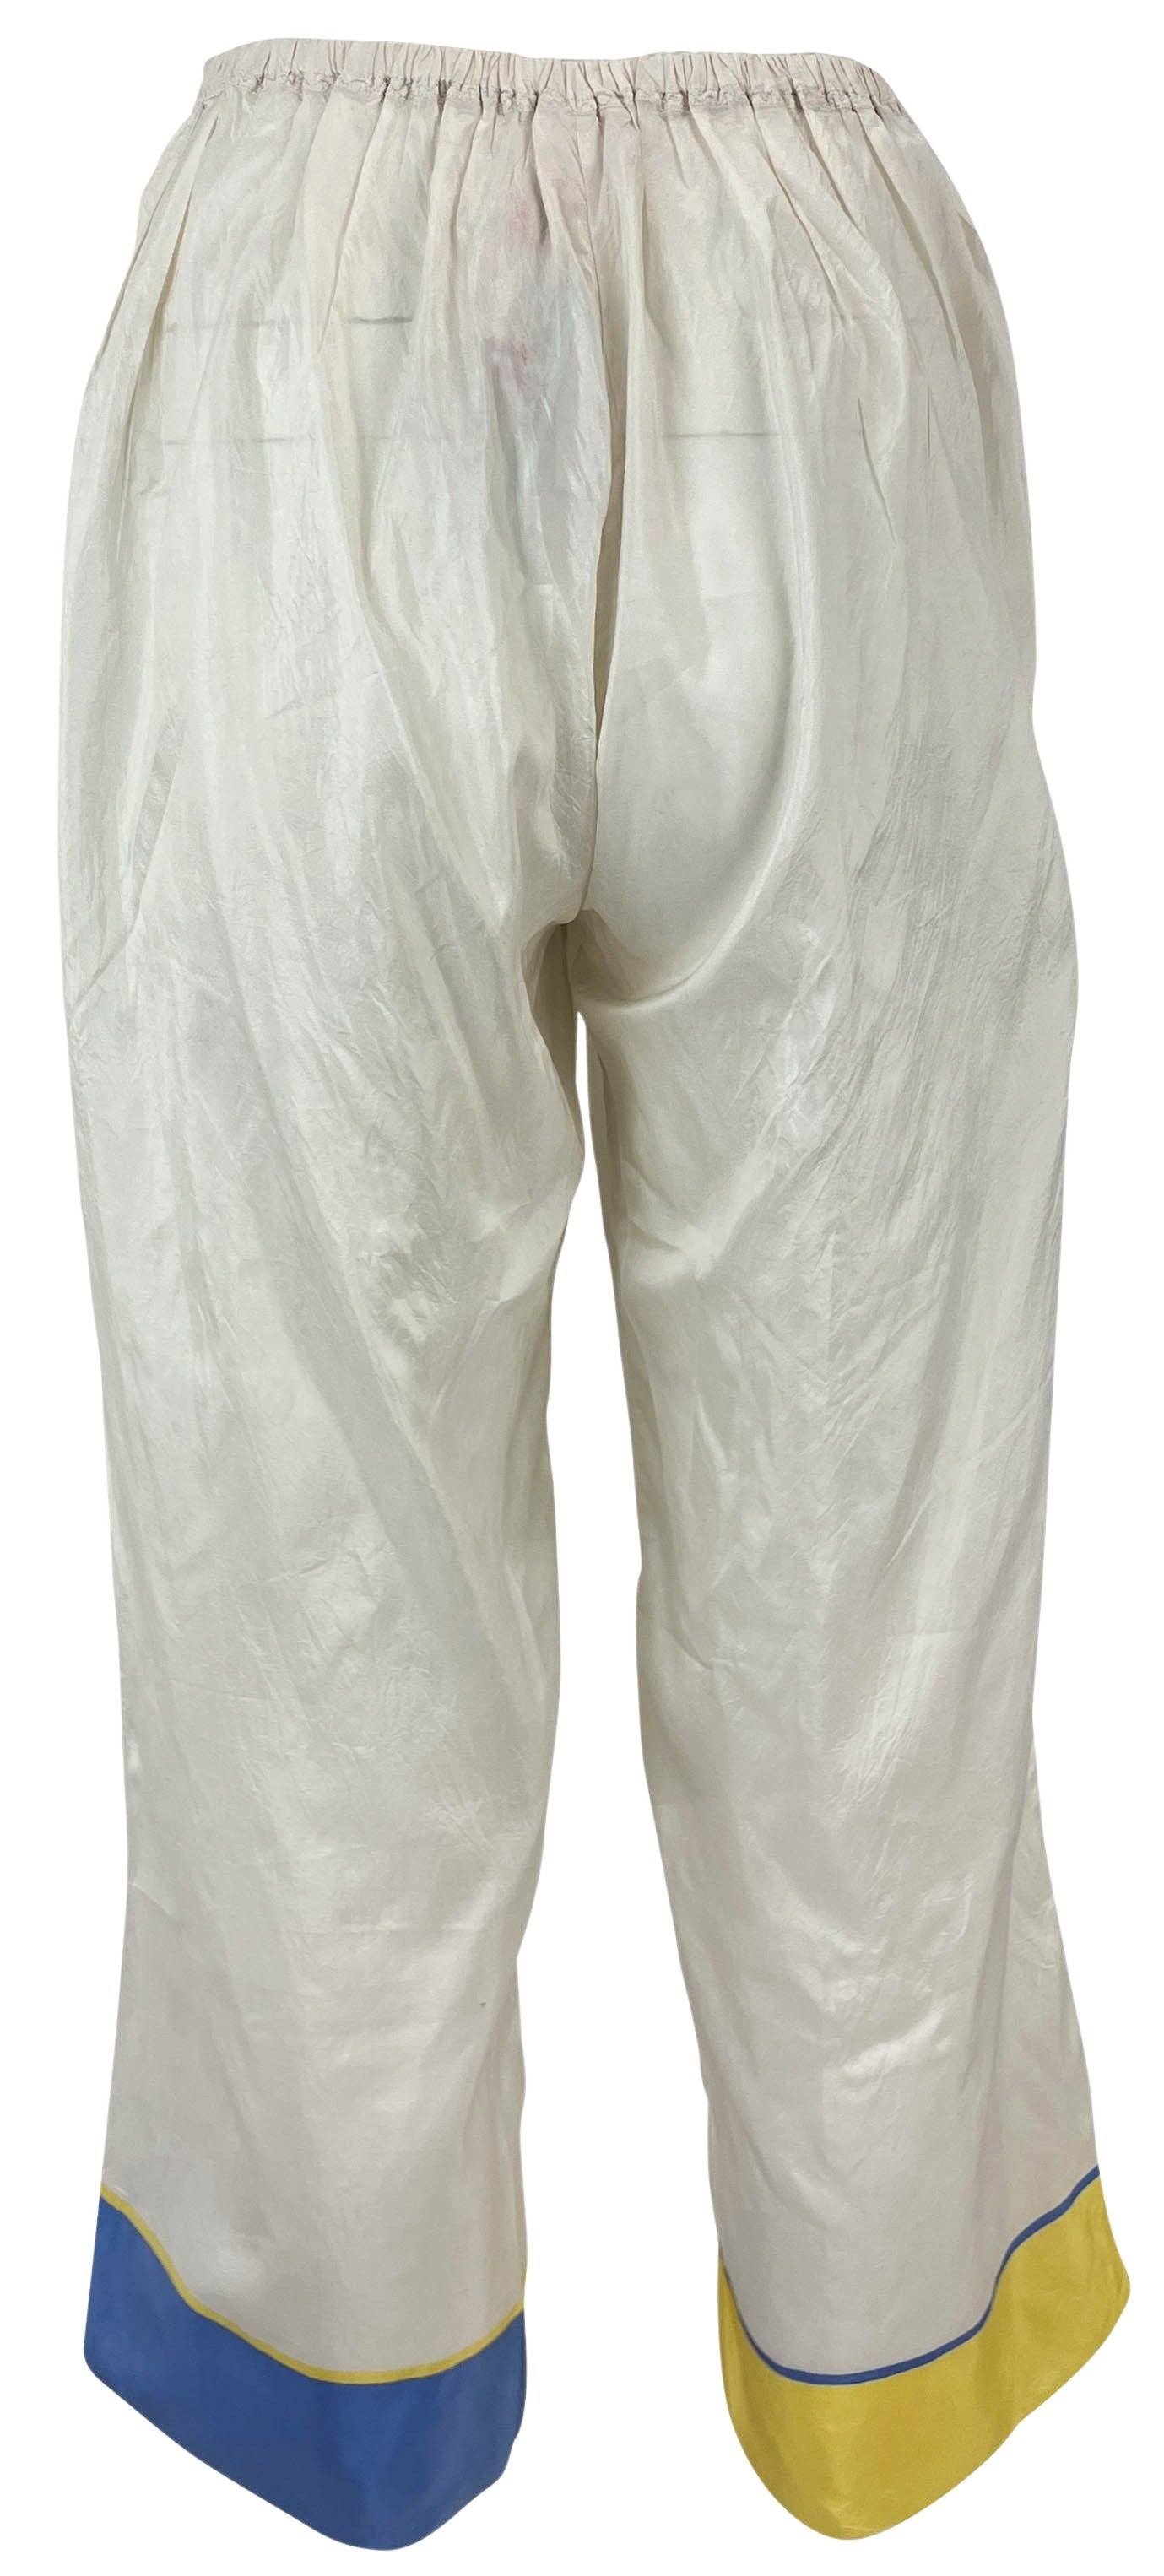 Péro Wide Leg Pants in Cream - Discounts on Péro at UAL